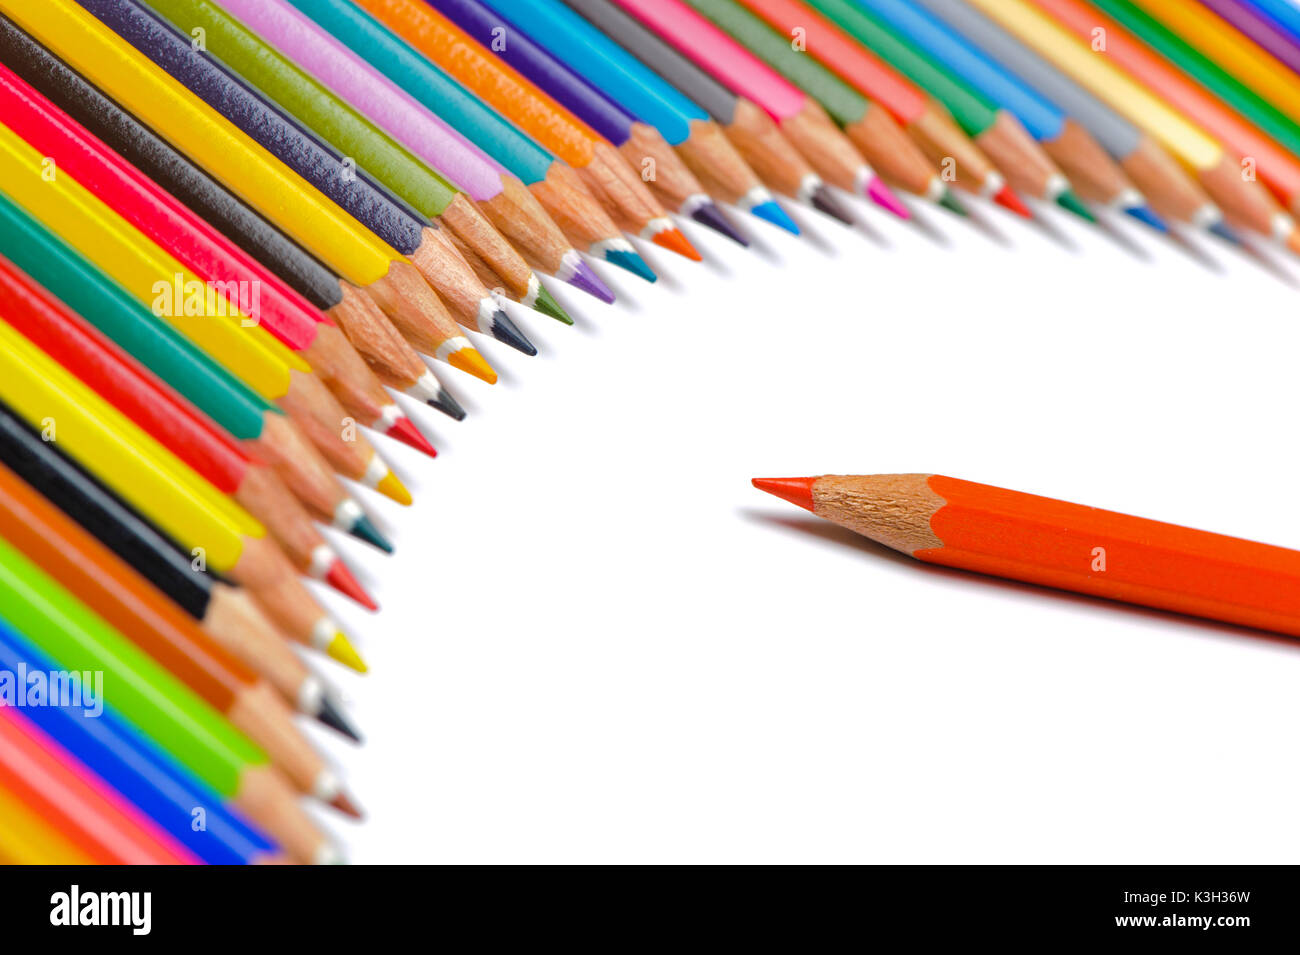 Team and Senior symbolically close coloured pencils displayed Stock Photo